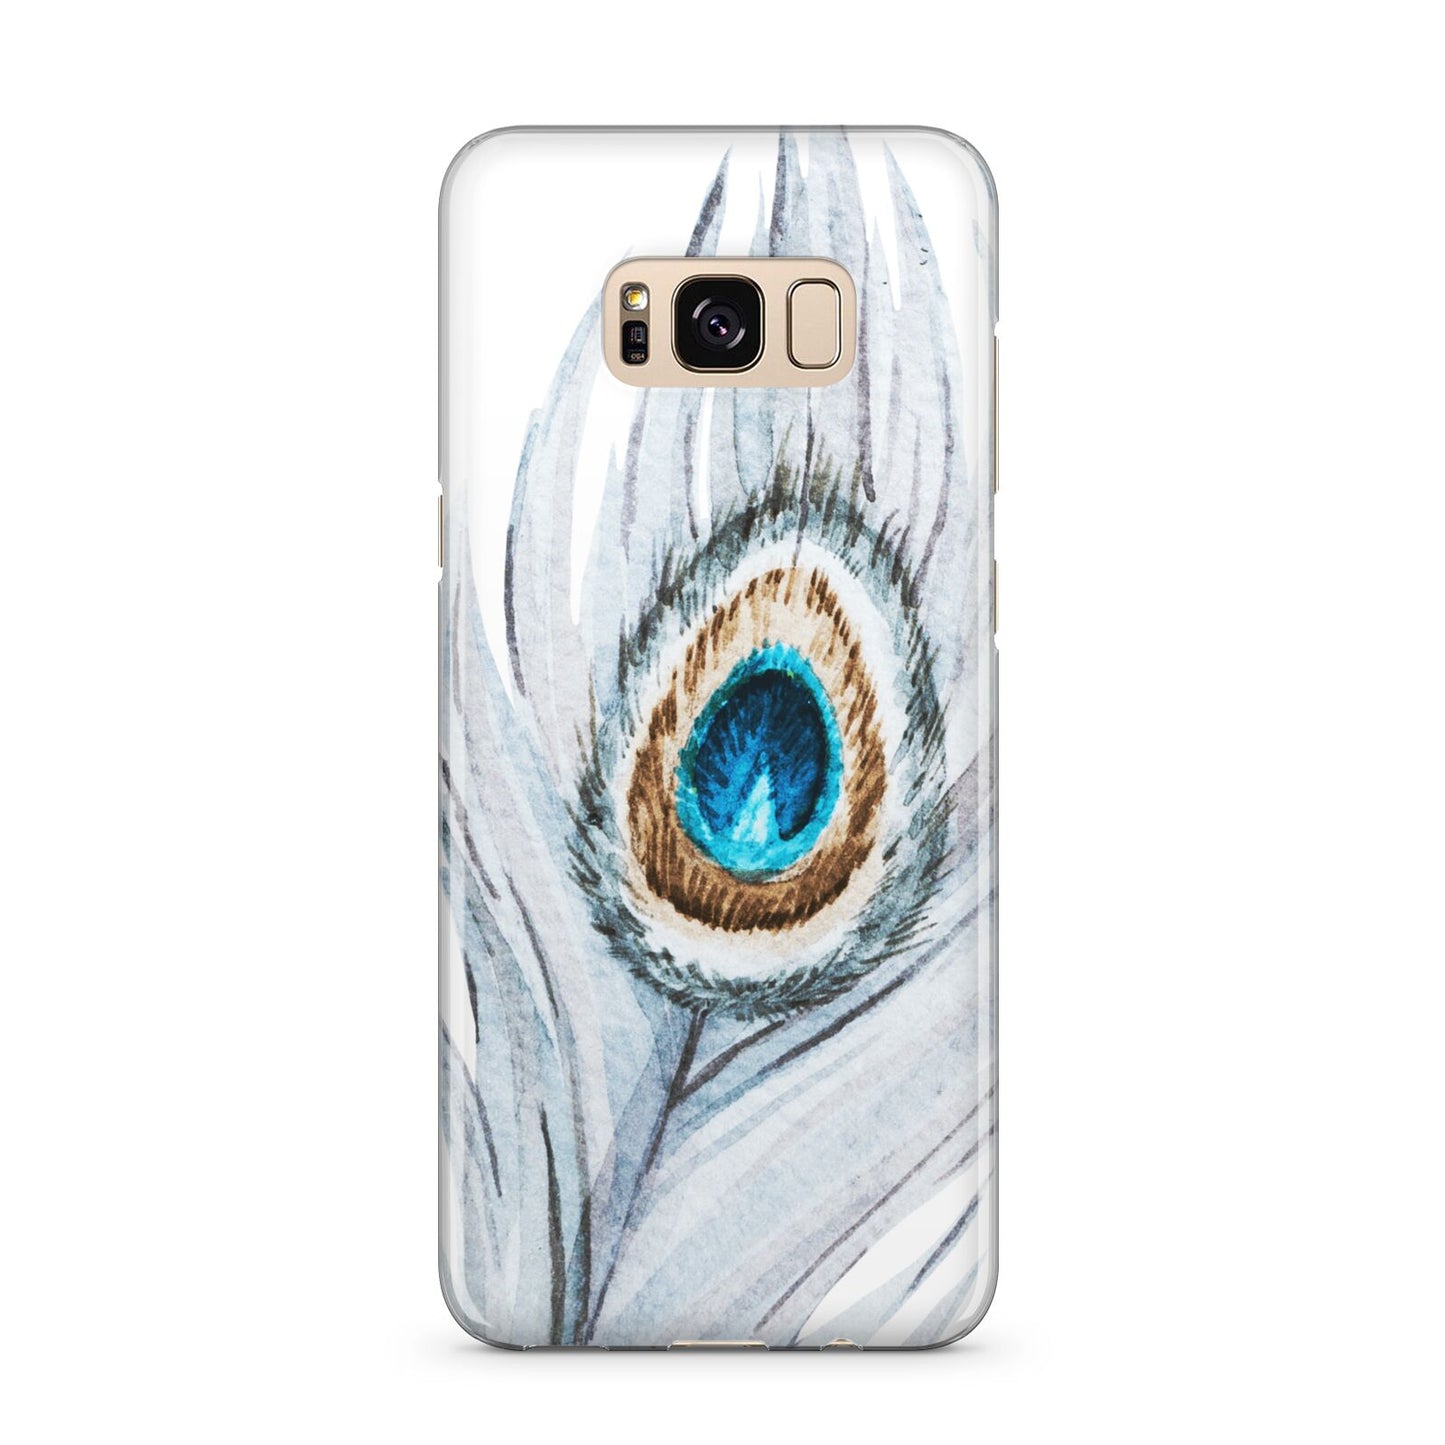 Peacock Samsung Galaxy S8 Plus Case